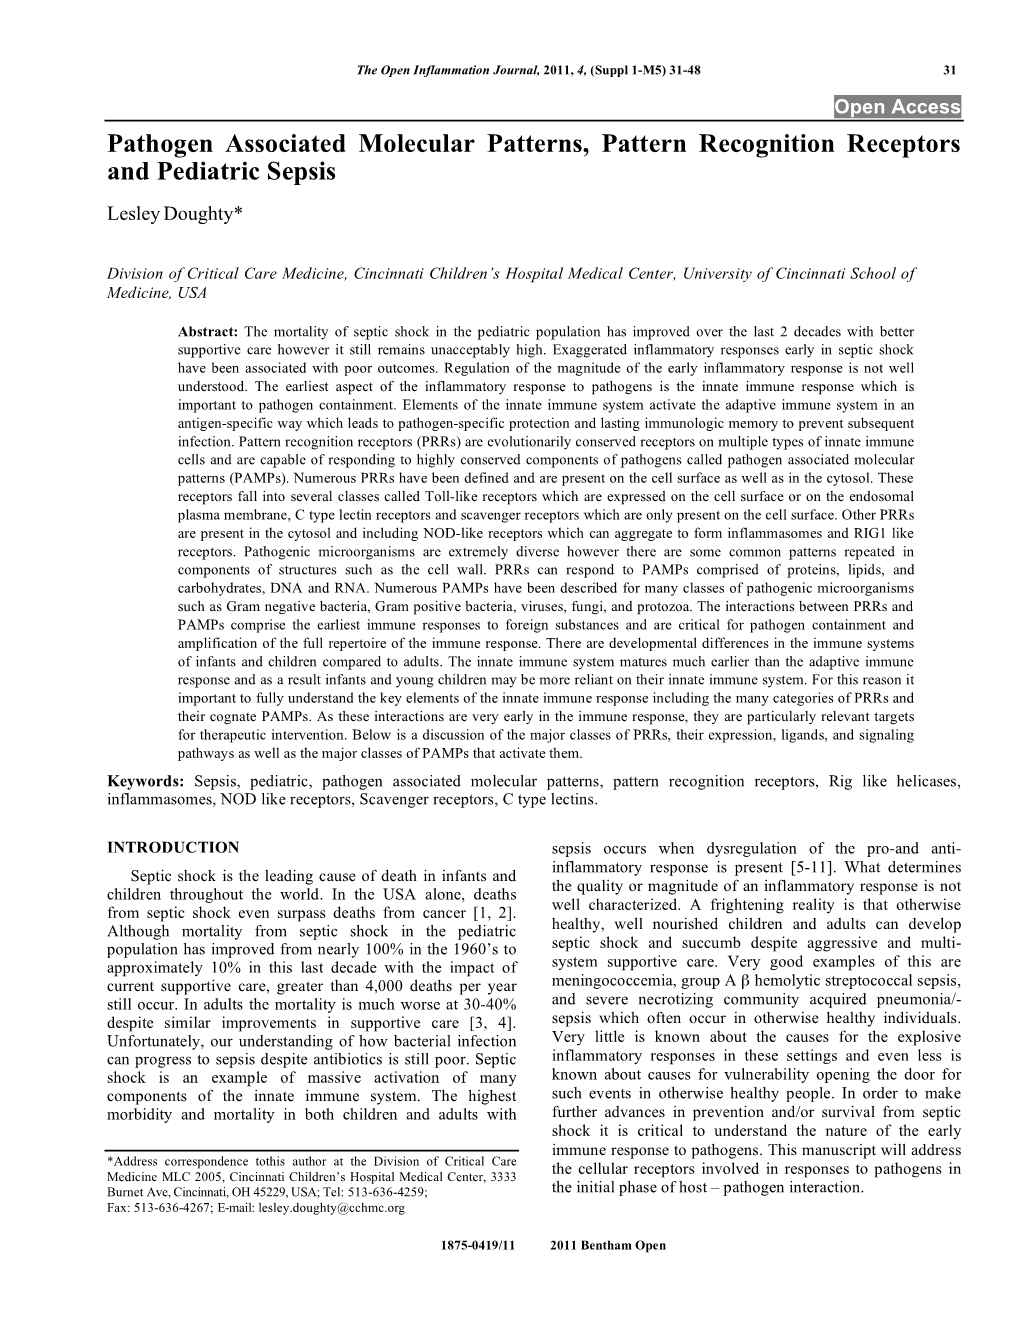 Pathogen Associated Molecular Patterns, Pattern Recognition Receptors and Pediatric Sepsis Lesley Doughty*